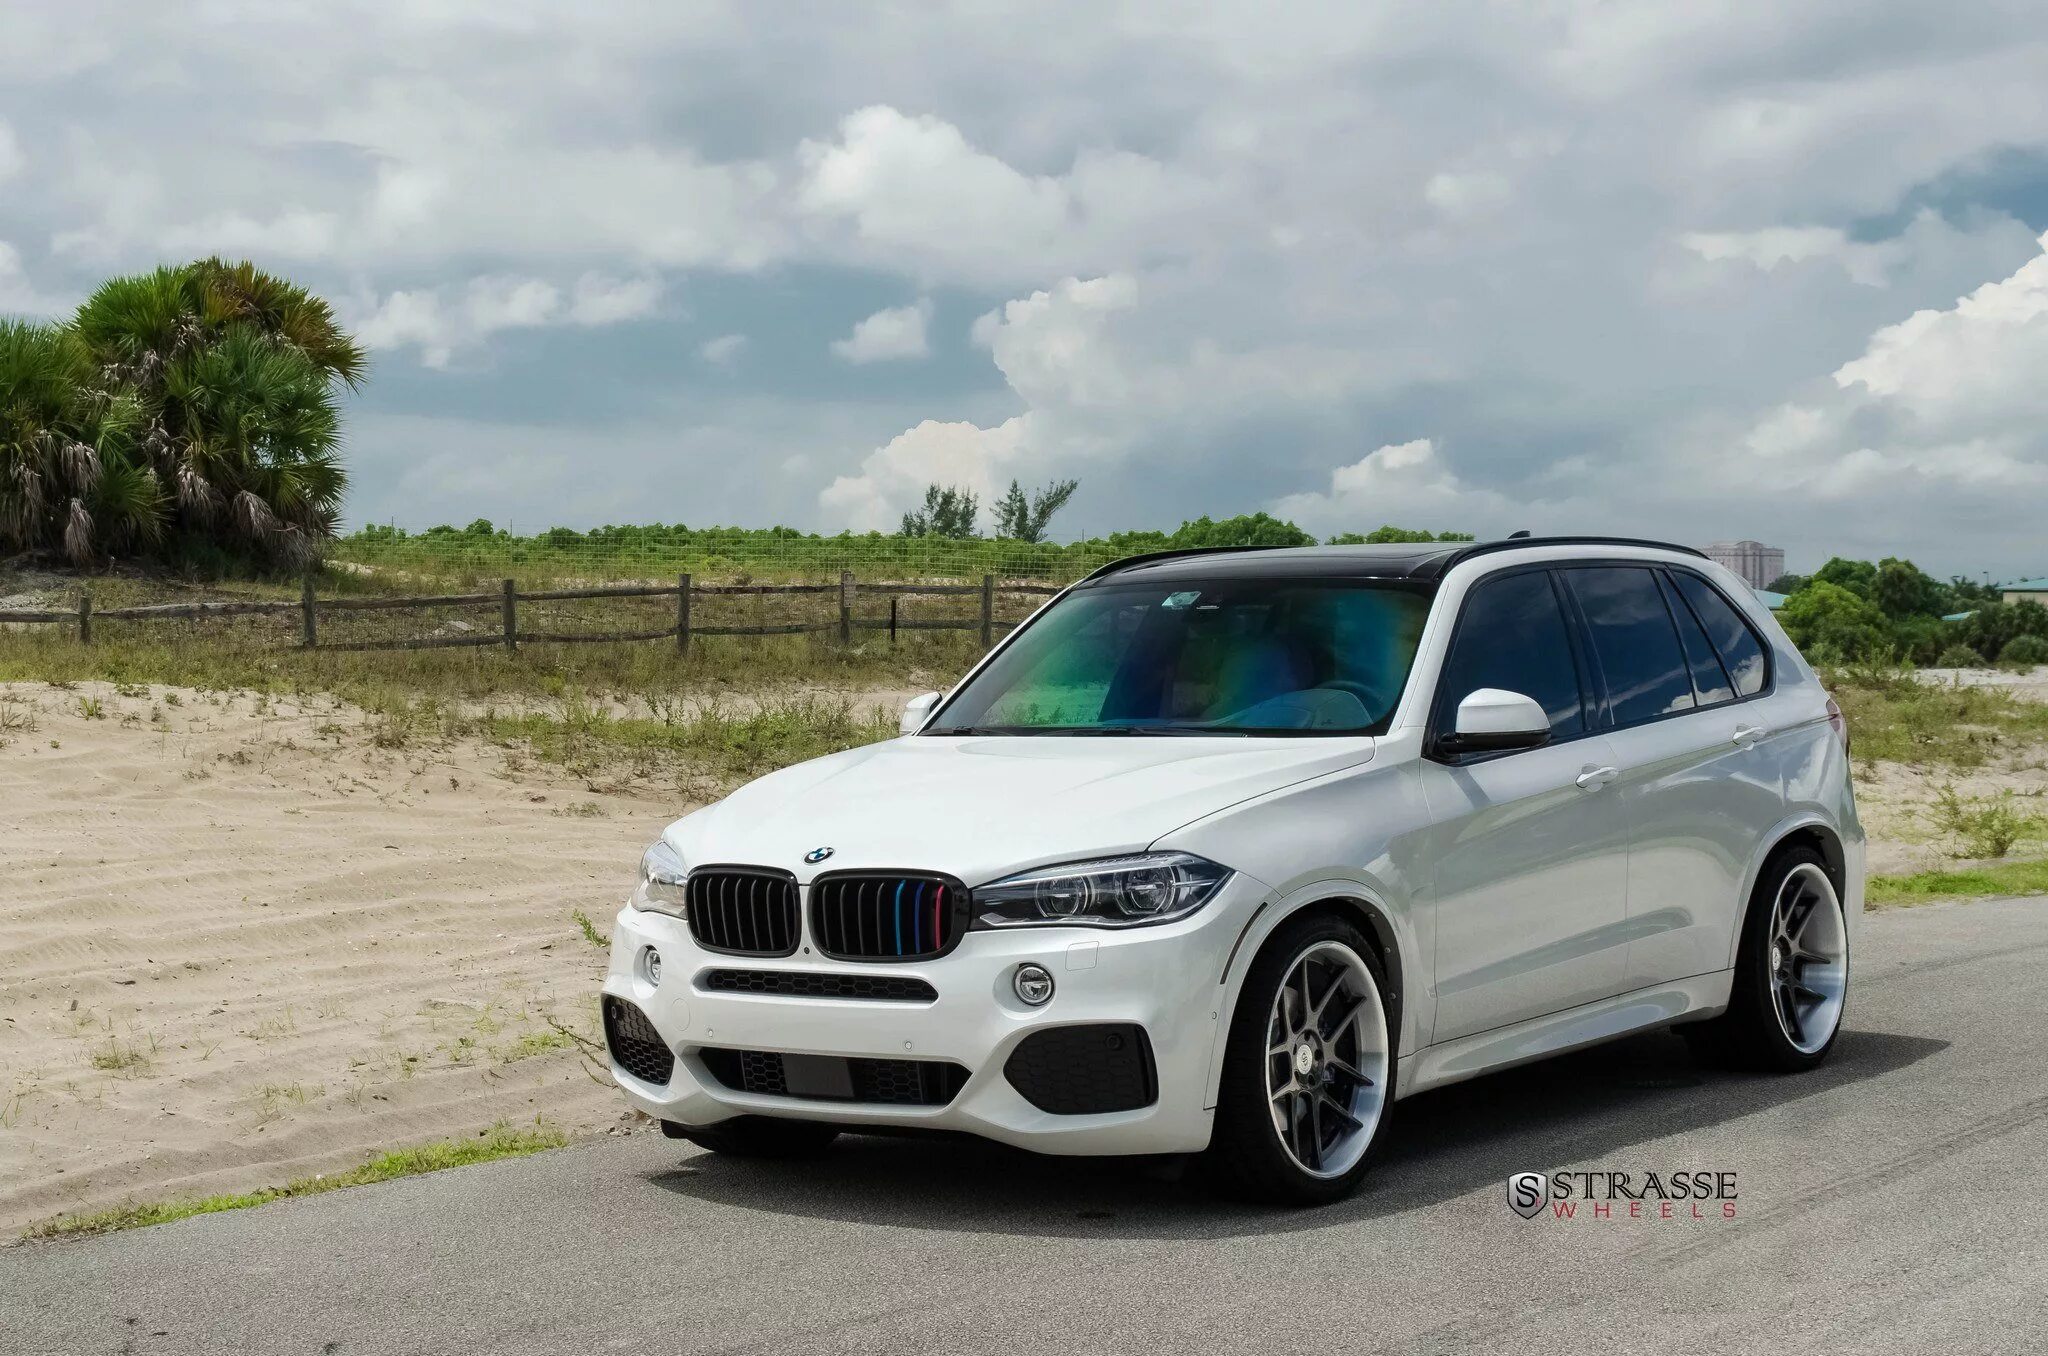 БМВ x5 f15 белый. BMW x5 спорт. BMW x5 2015 белый. Белый БМВ х5 f15 с черной крышей.